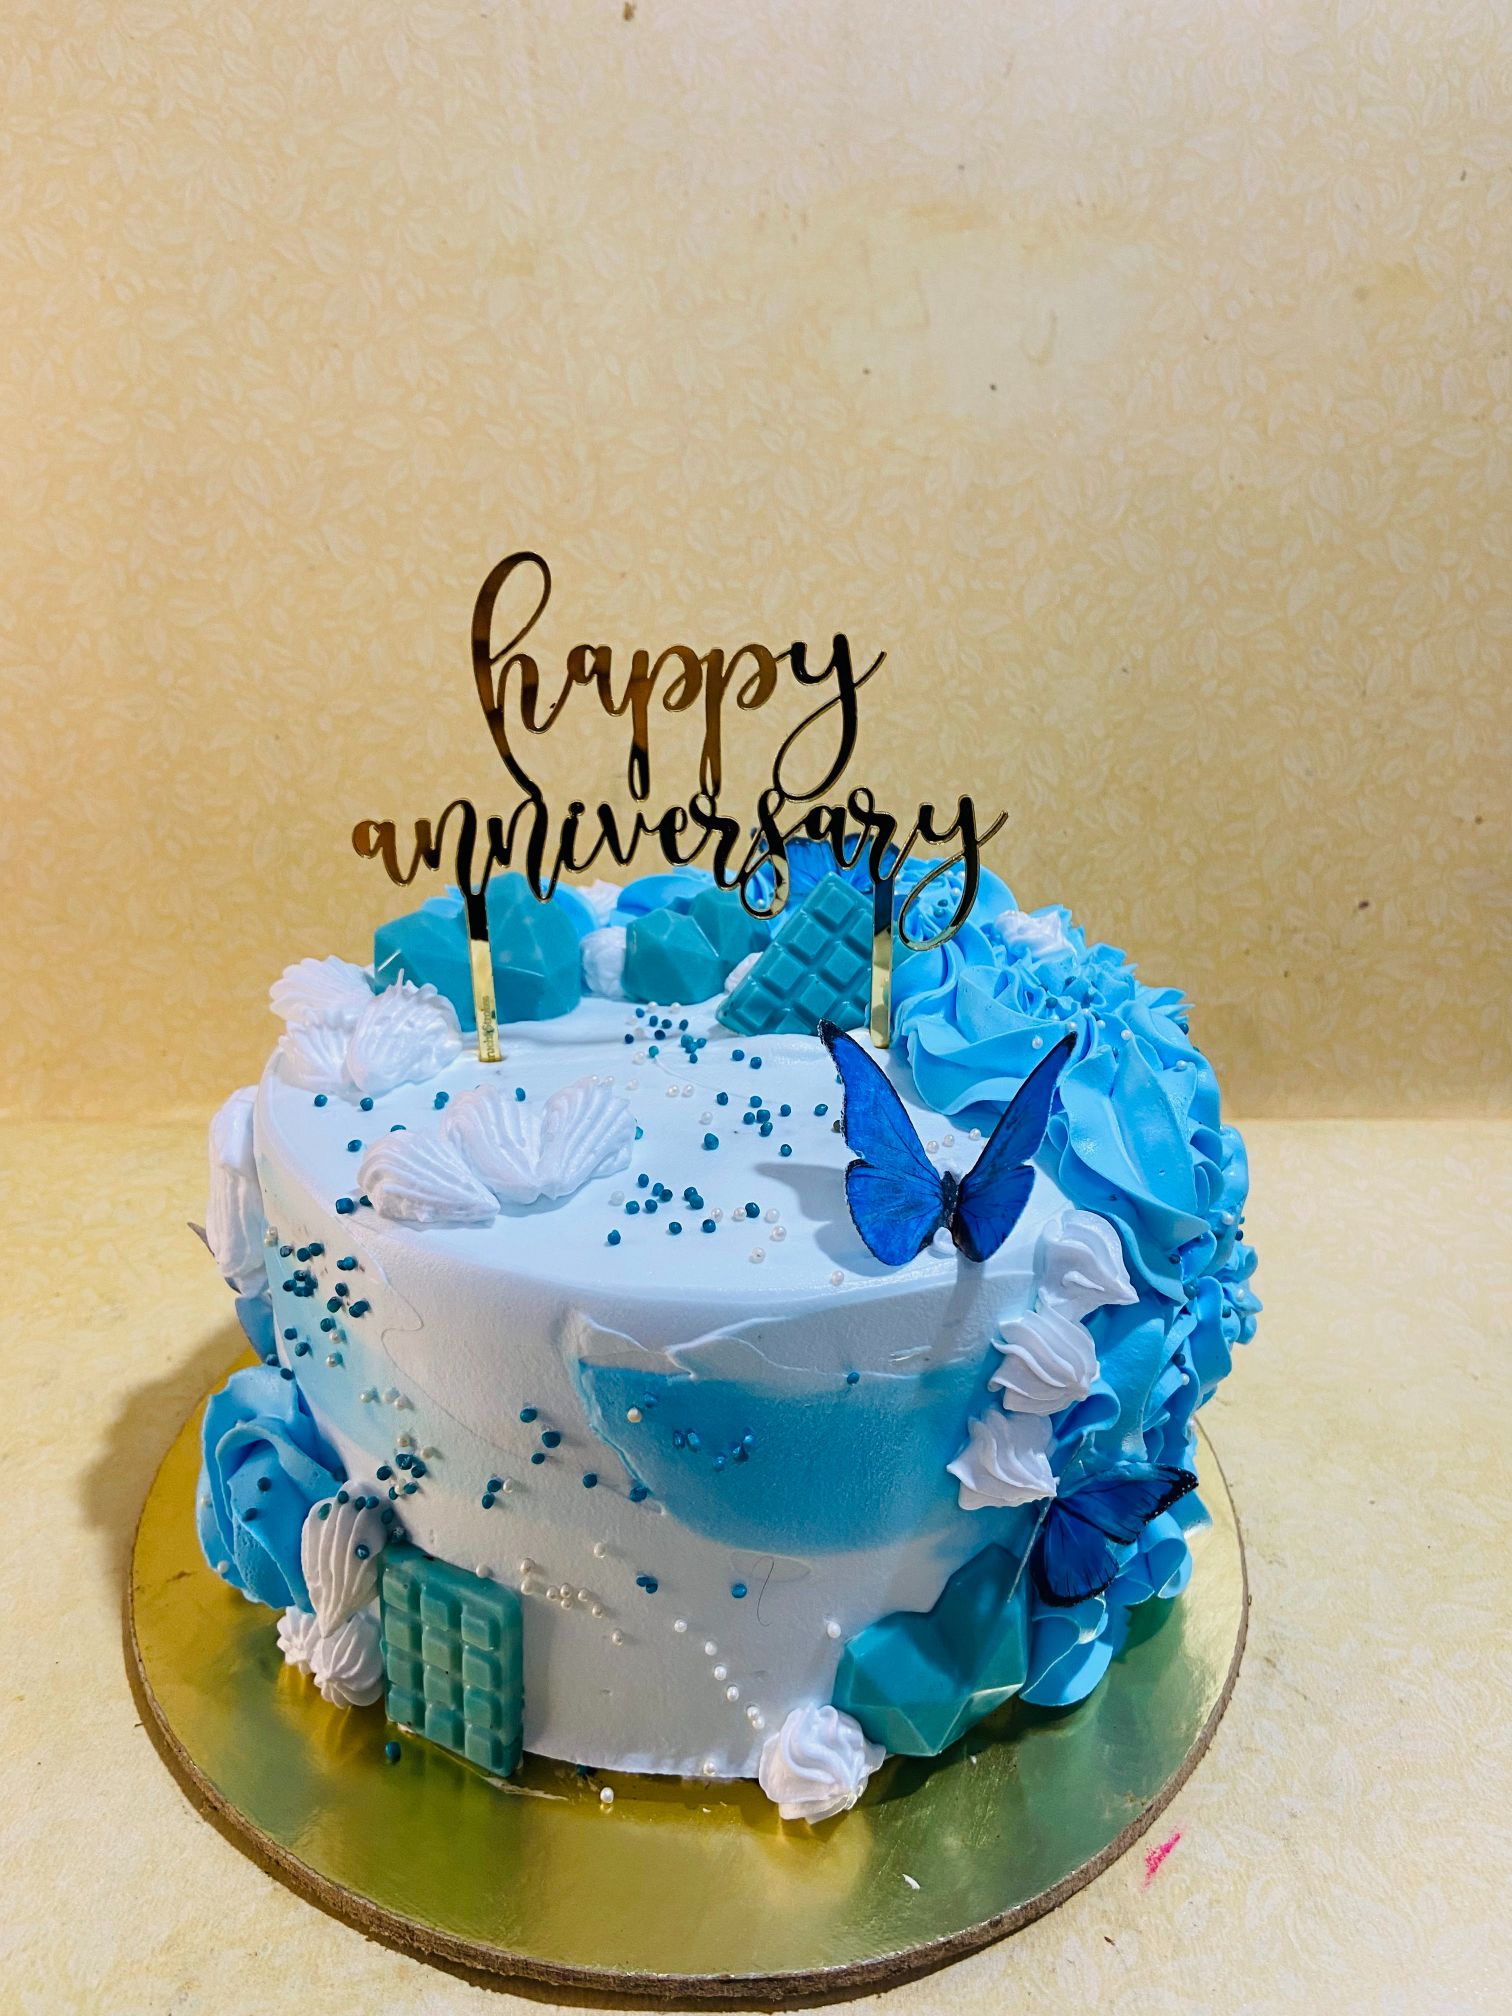 Wedding Anniversary Cake - Online Wedding Anniversary Cake | The Cake King™-sonthuy.vn